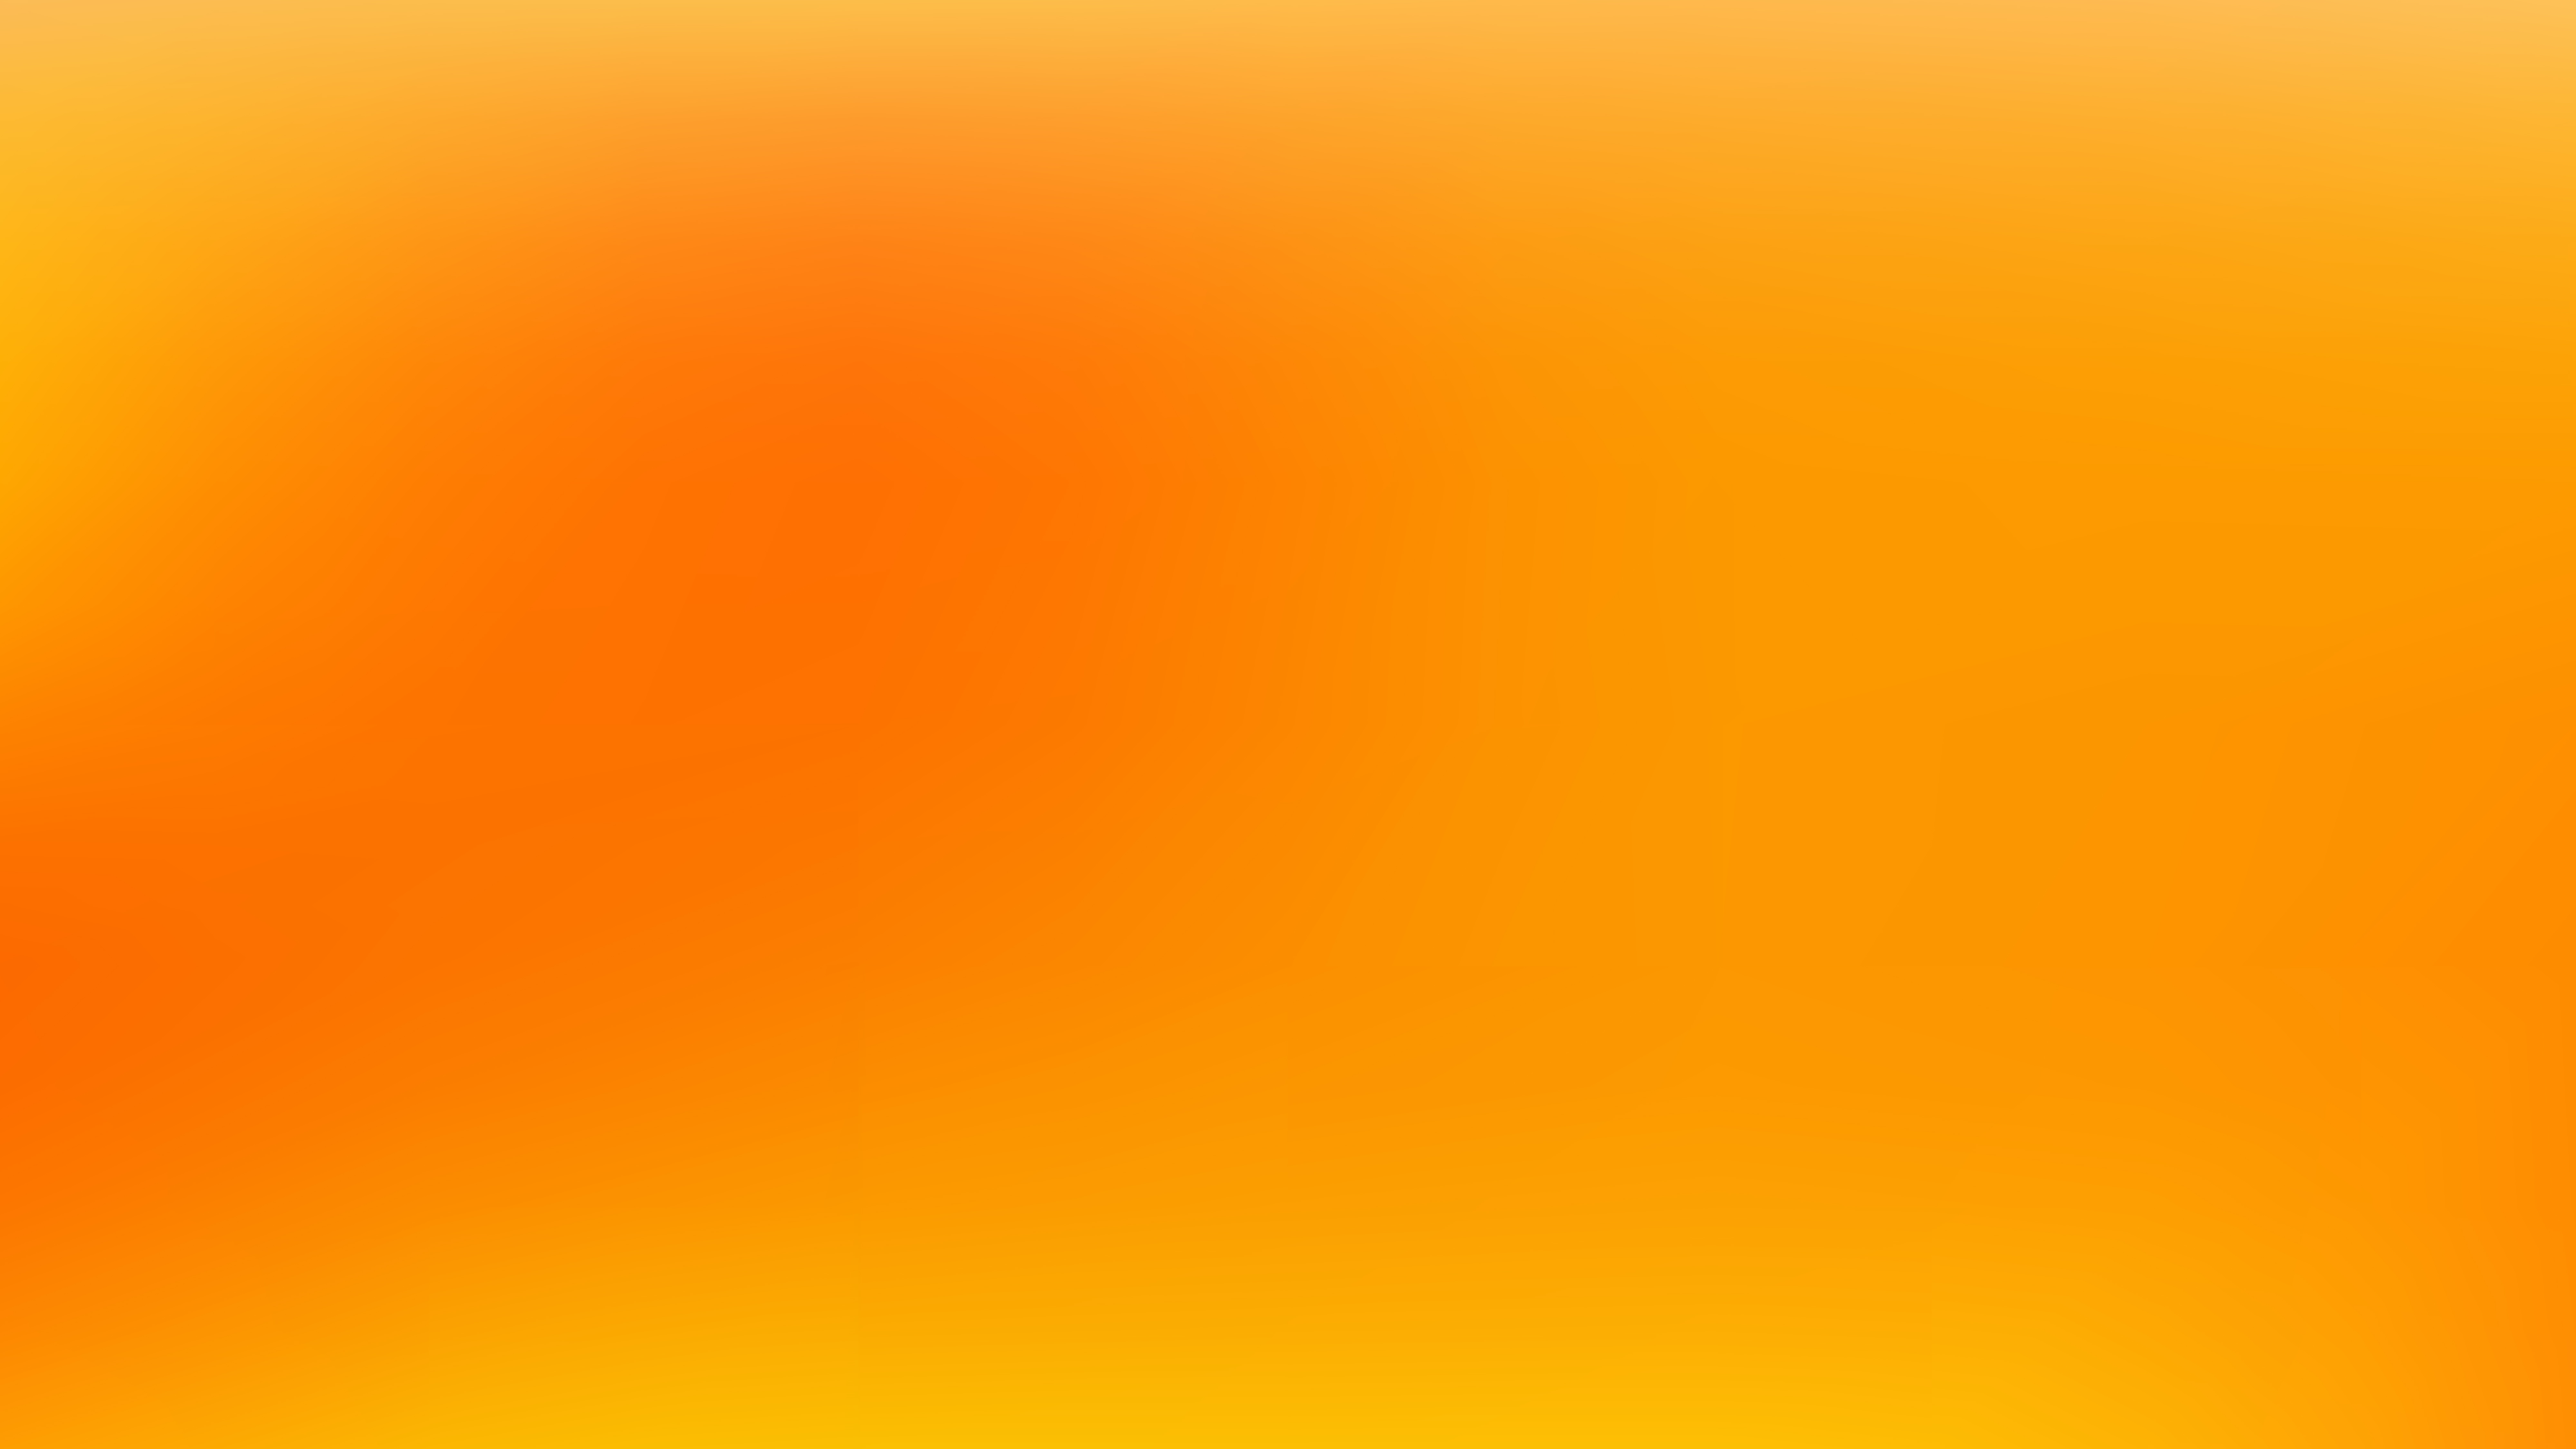 Free Orange and Yellow Blur Background Graphic